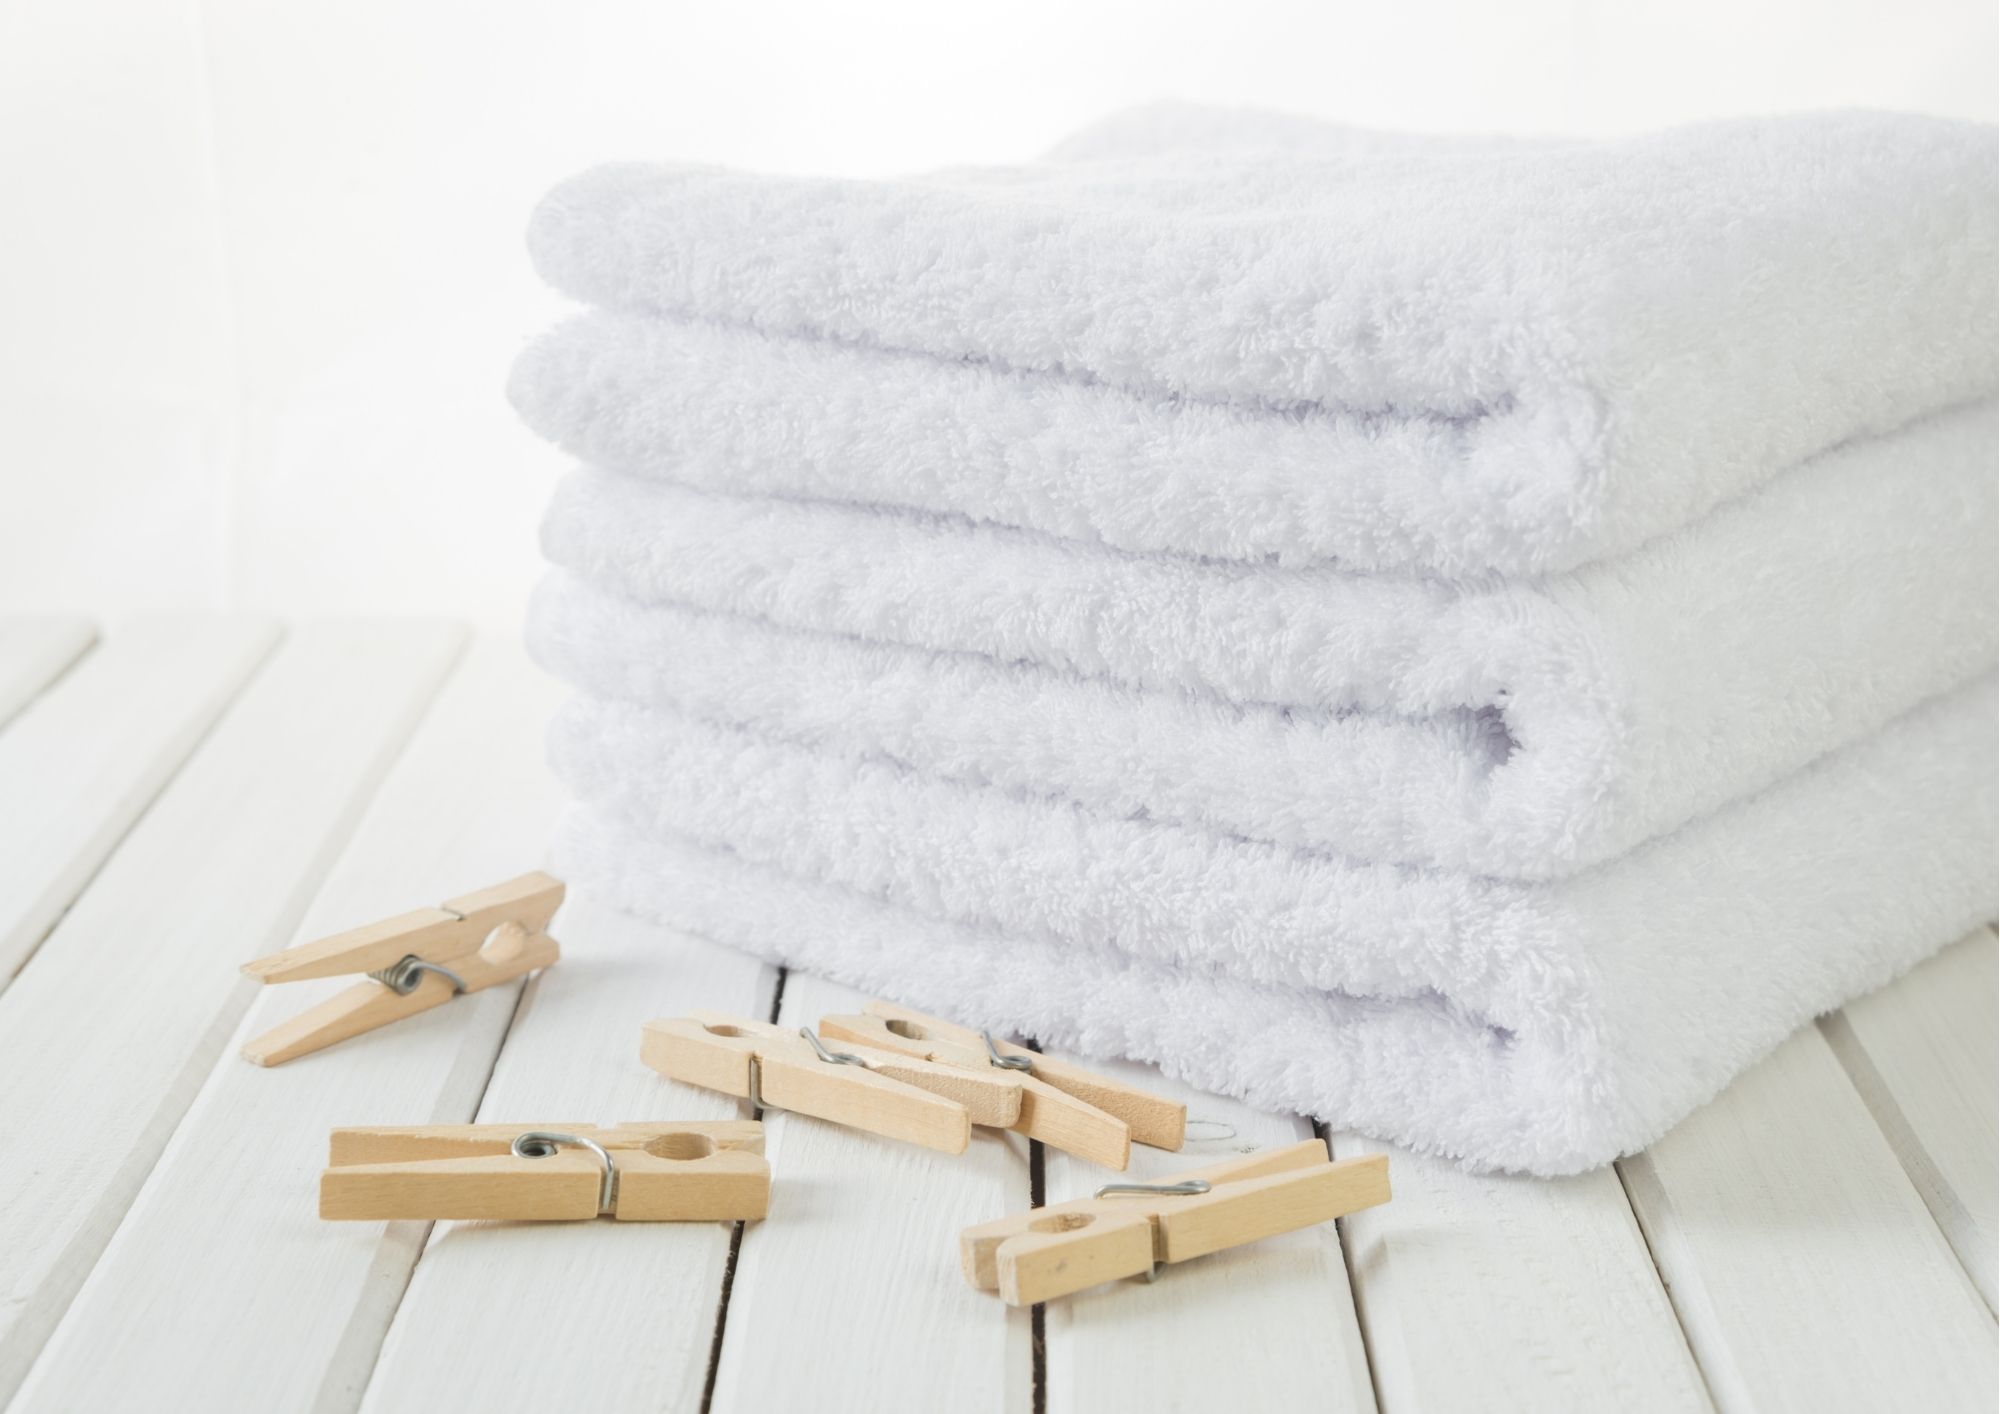 How Often Should I Wash My Towel?